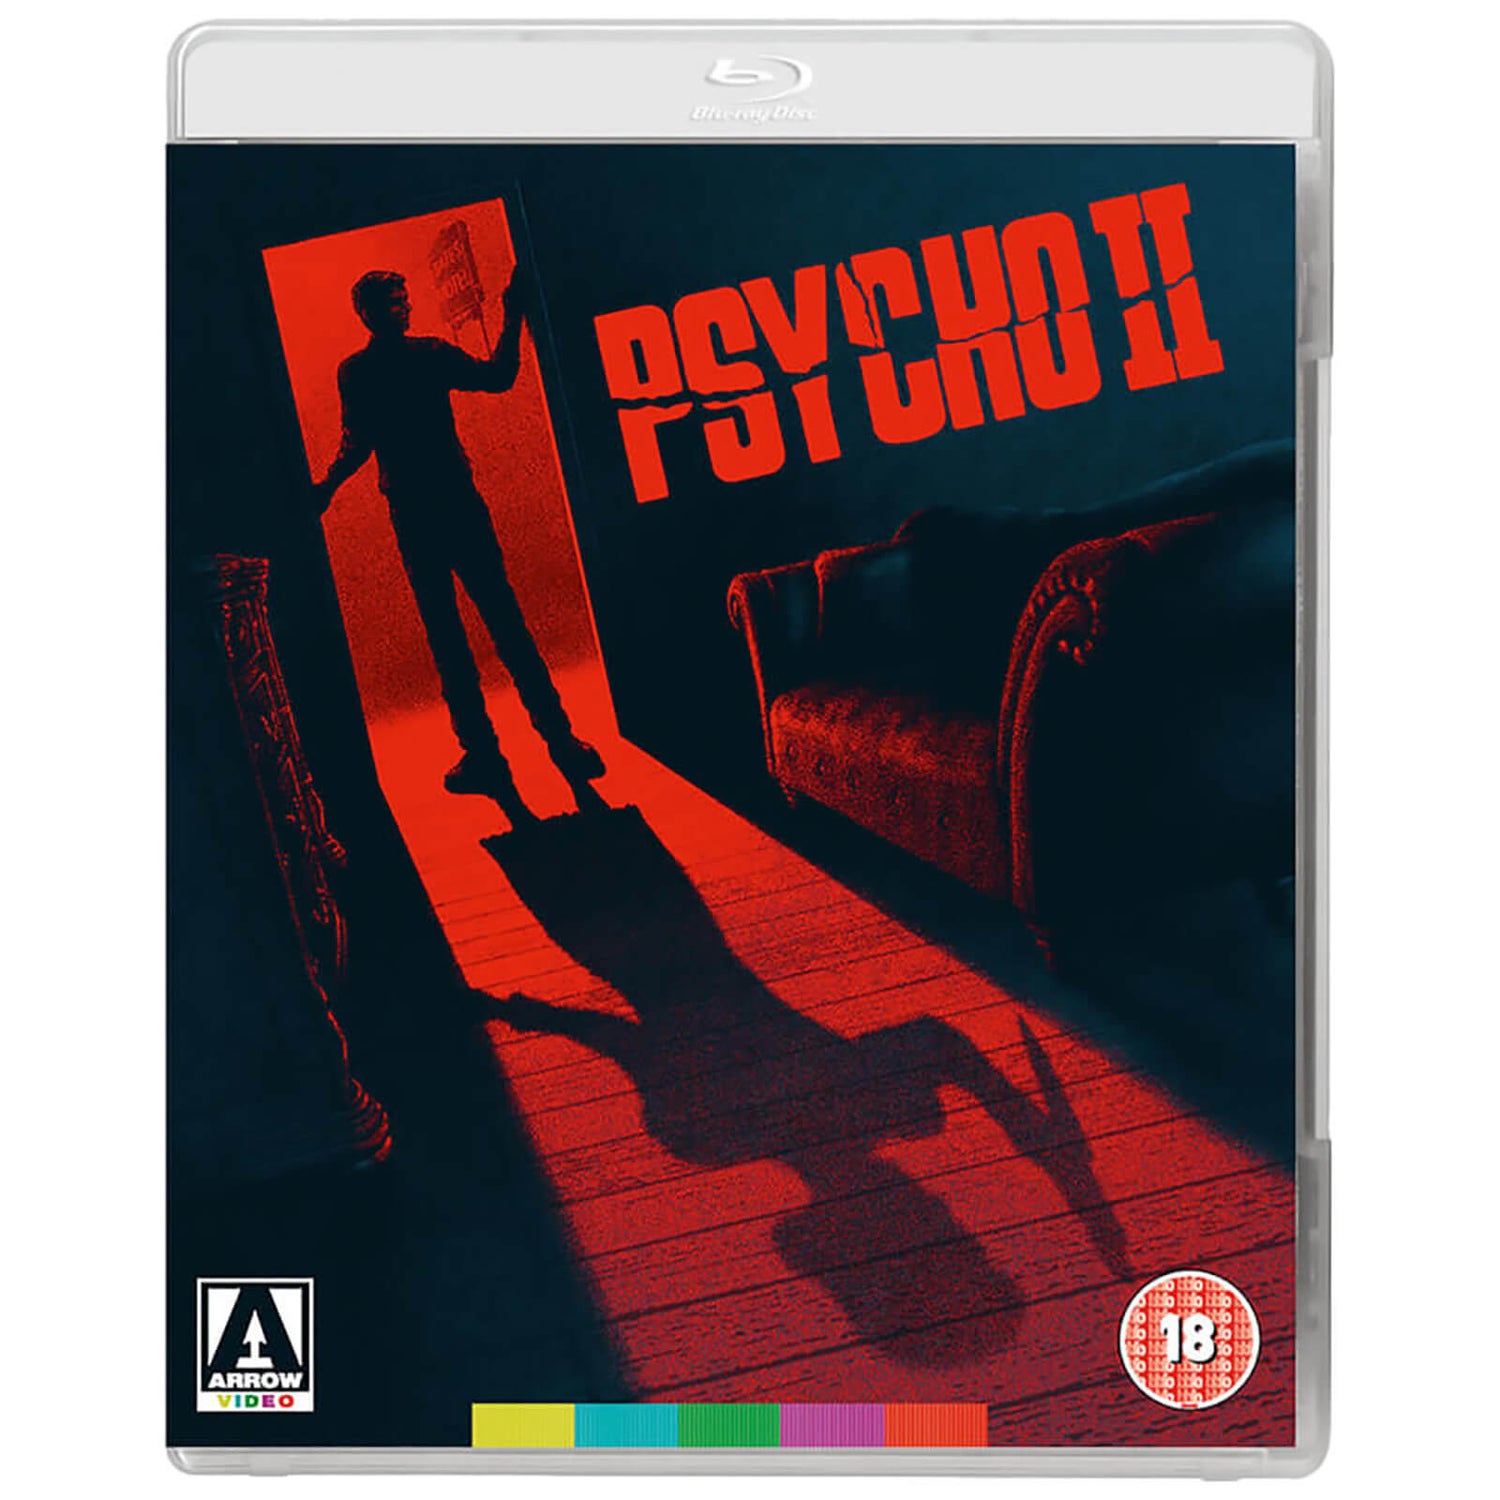 Psycho II Blu-ray